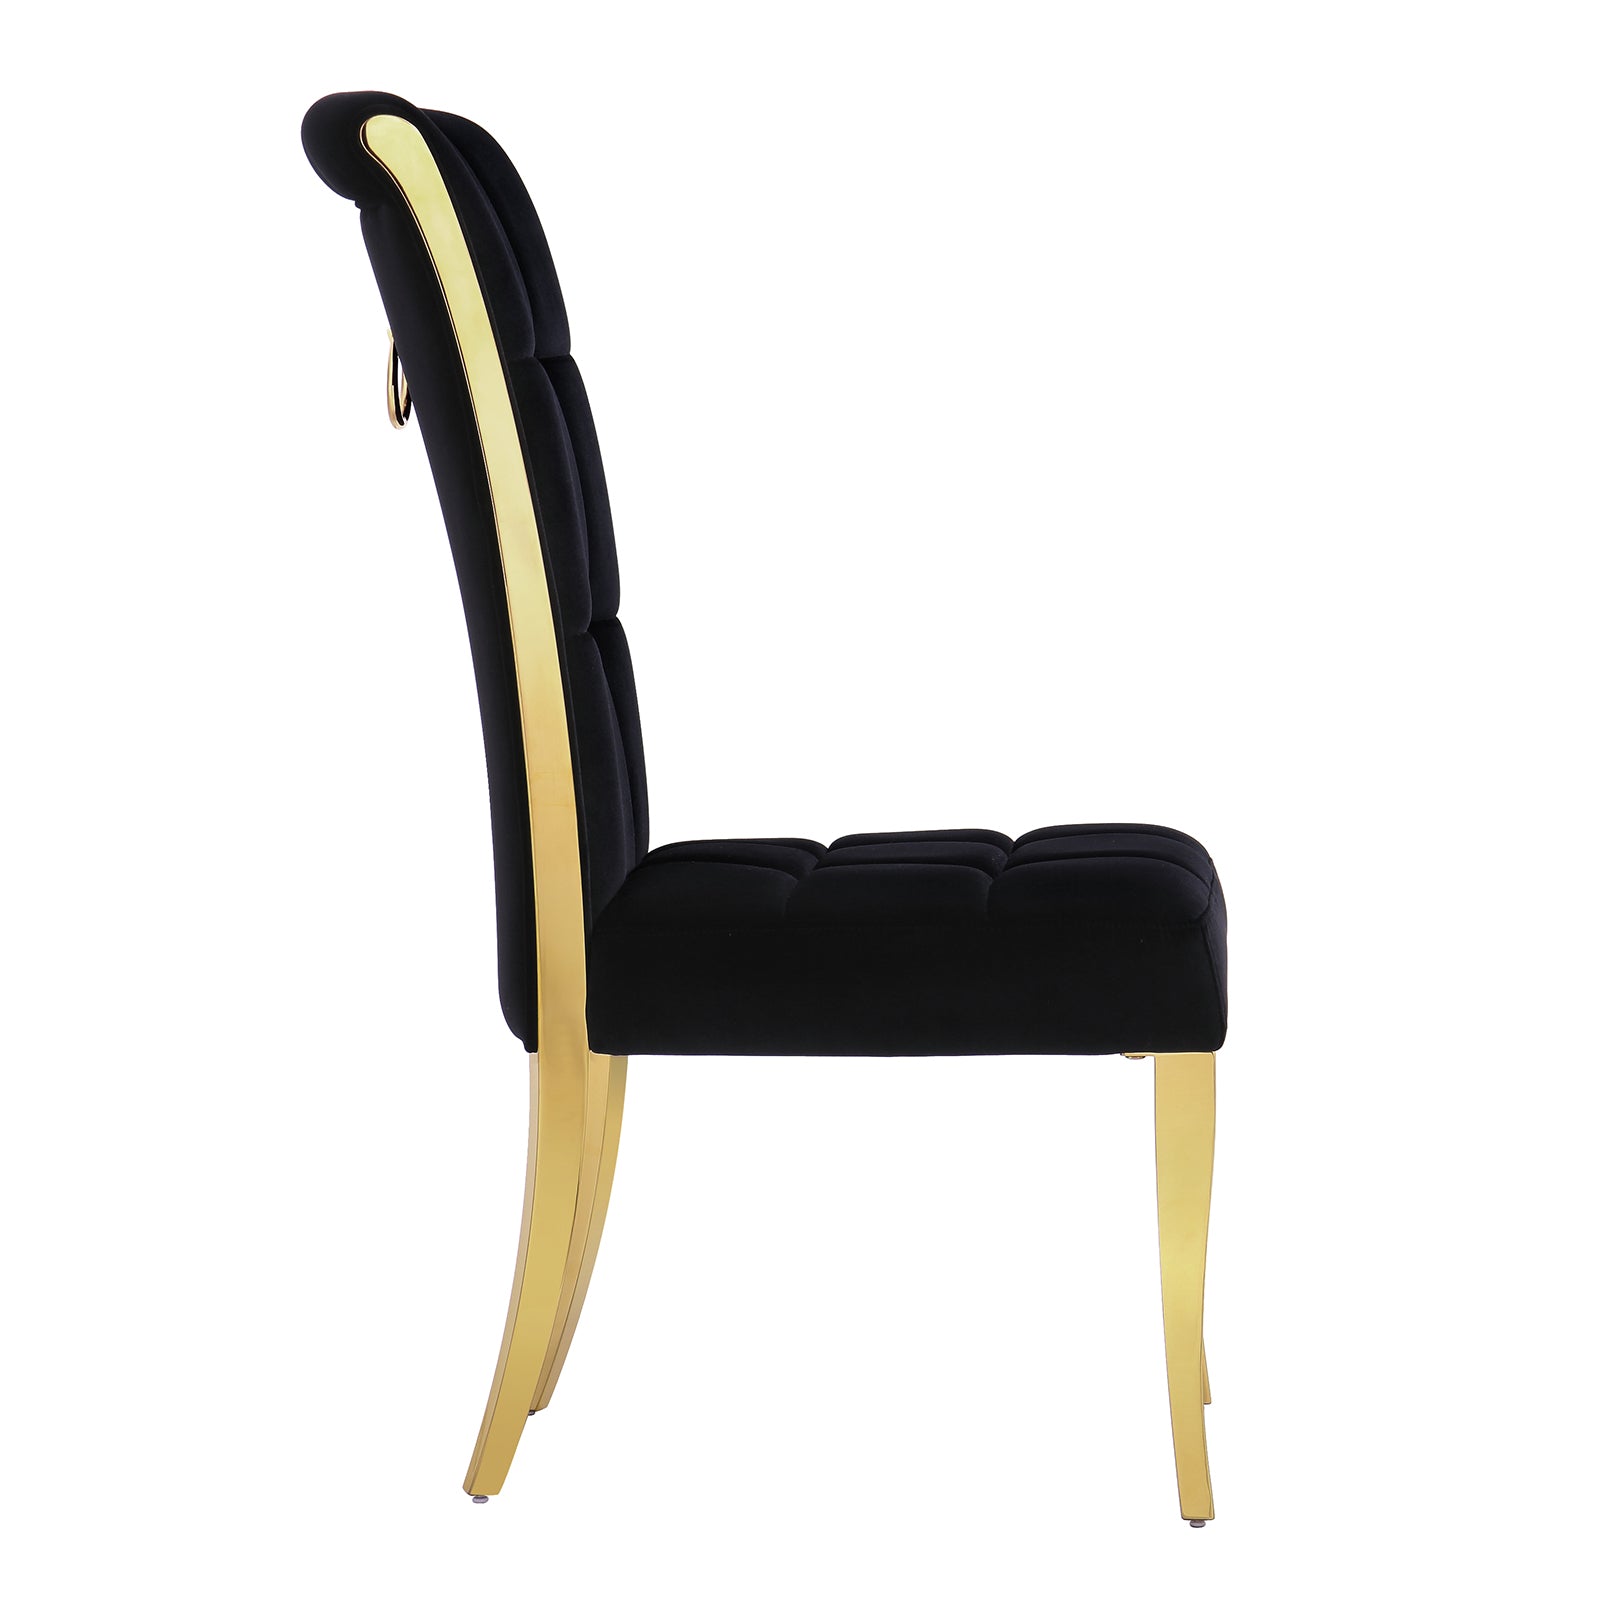 Black Velvet Dining Chairs | Geometric square back| Metal legs| C149